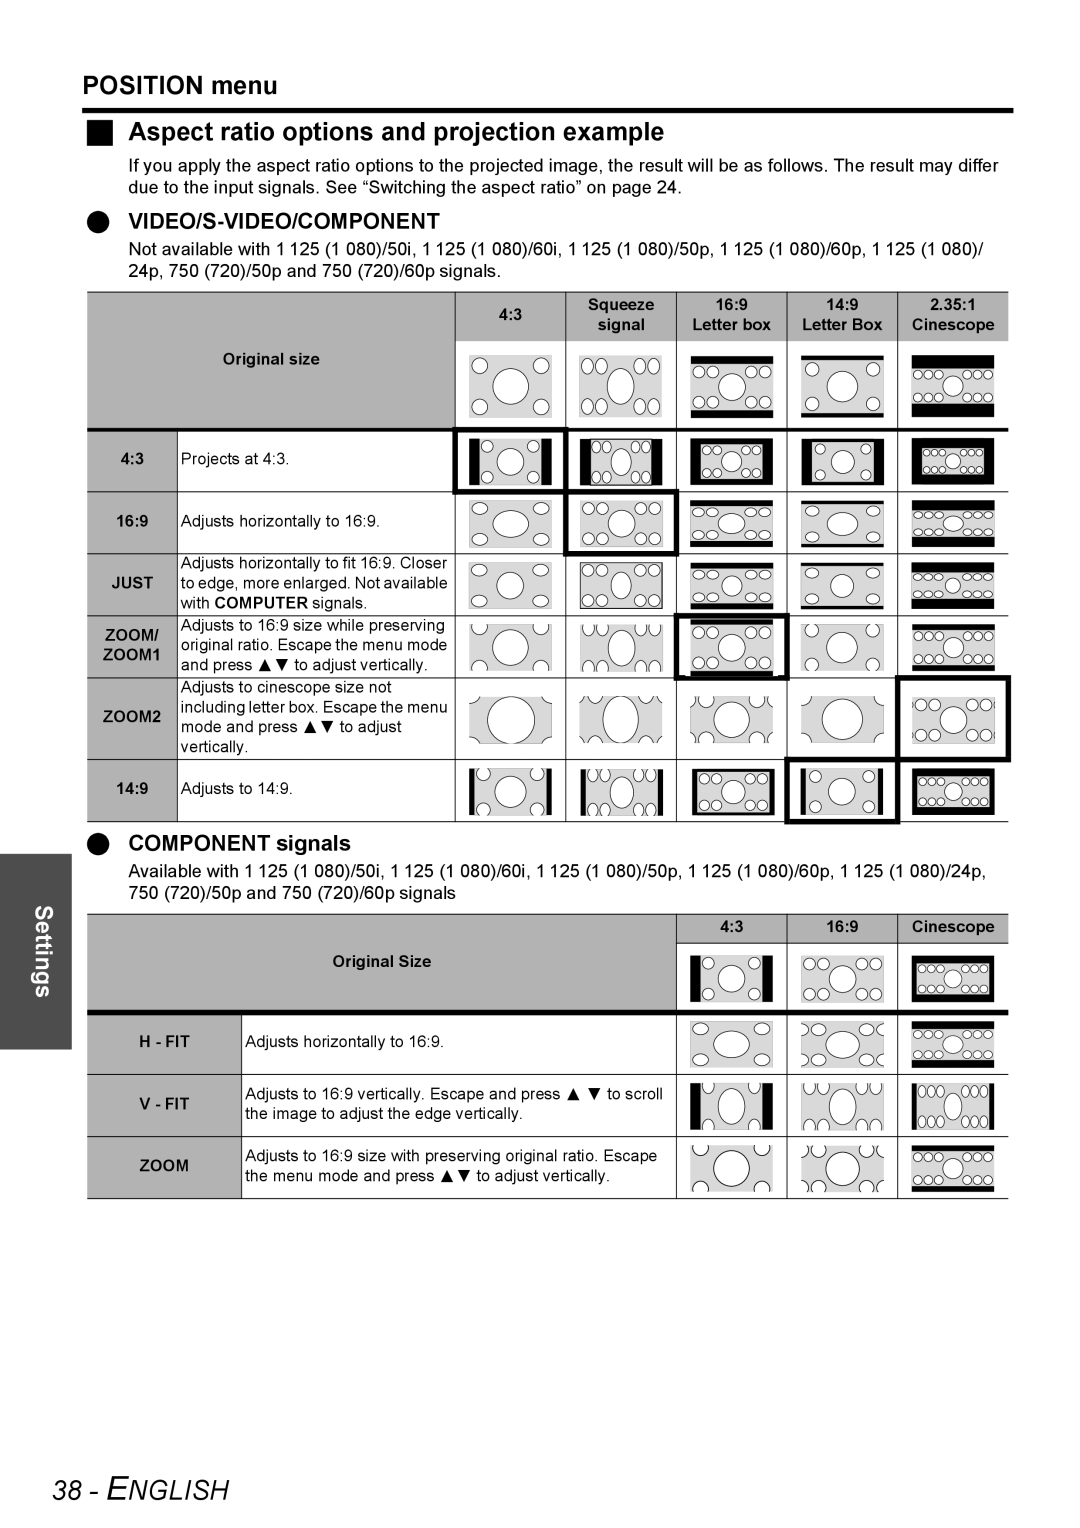 Panasonic PT-AE3000E manual English, POSITION menu Aspect ratio options and projection example, Settings 